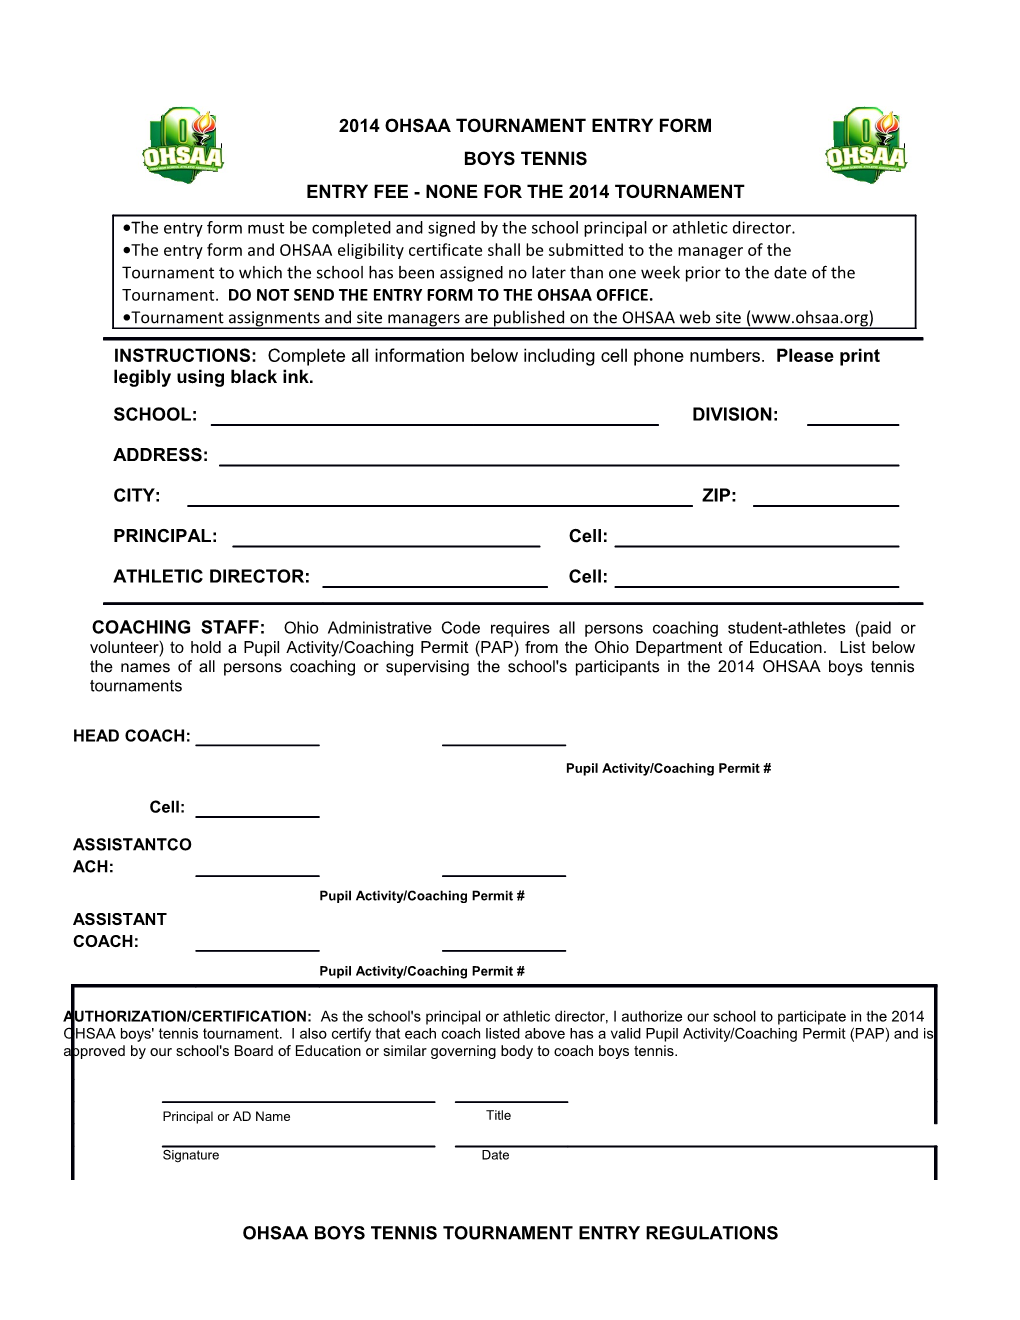 Ohsaa Boys Tennis Tournament Entry Regulations